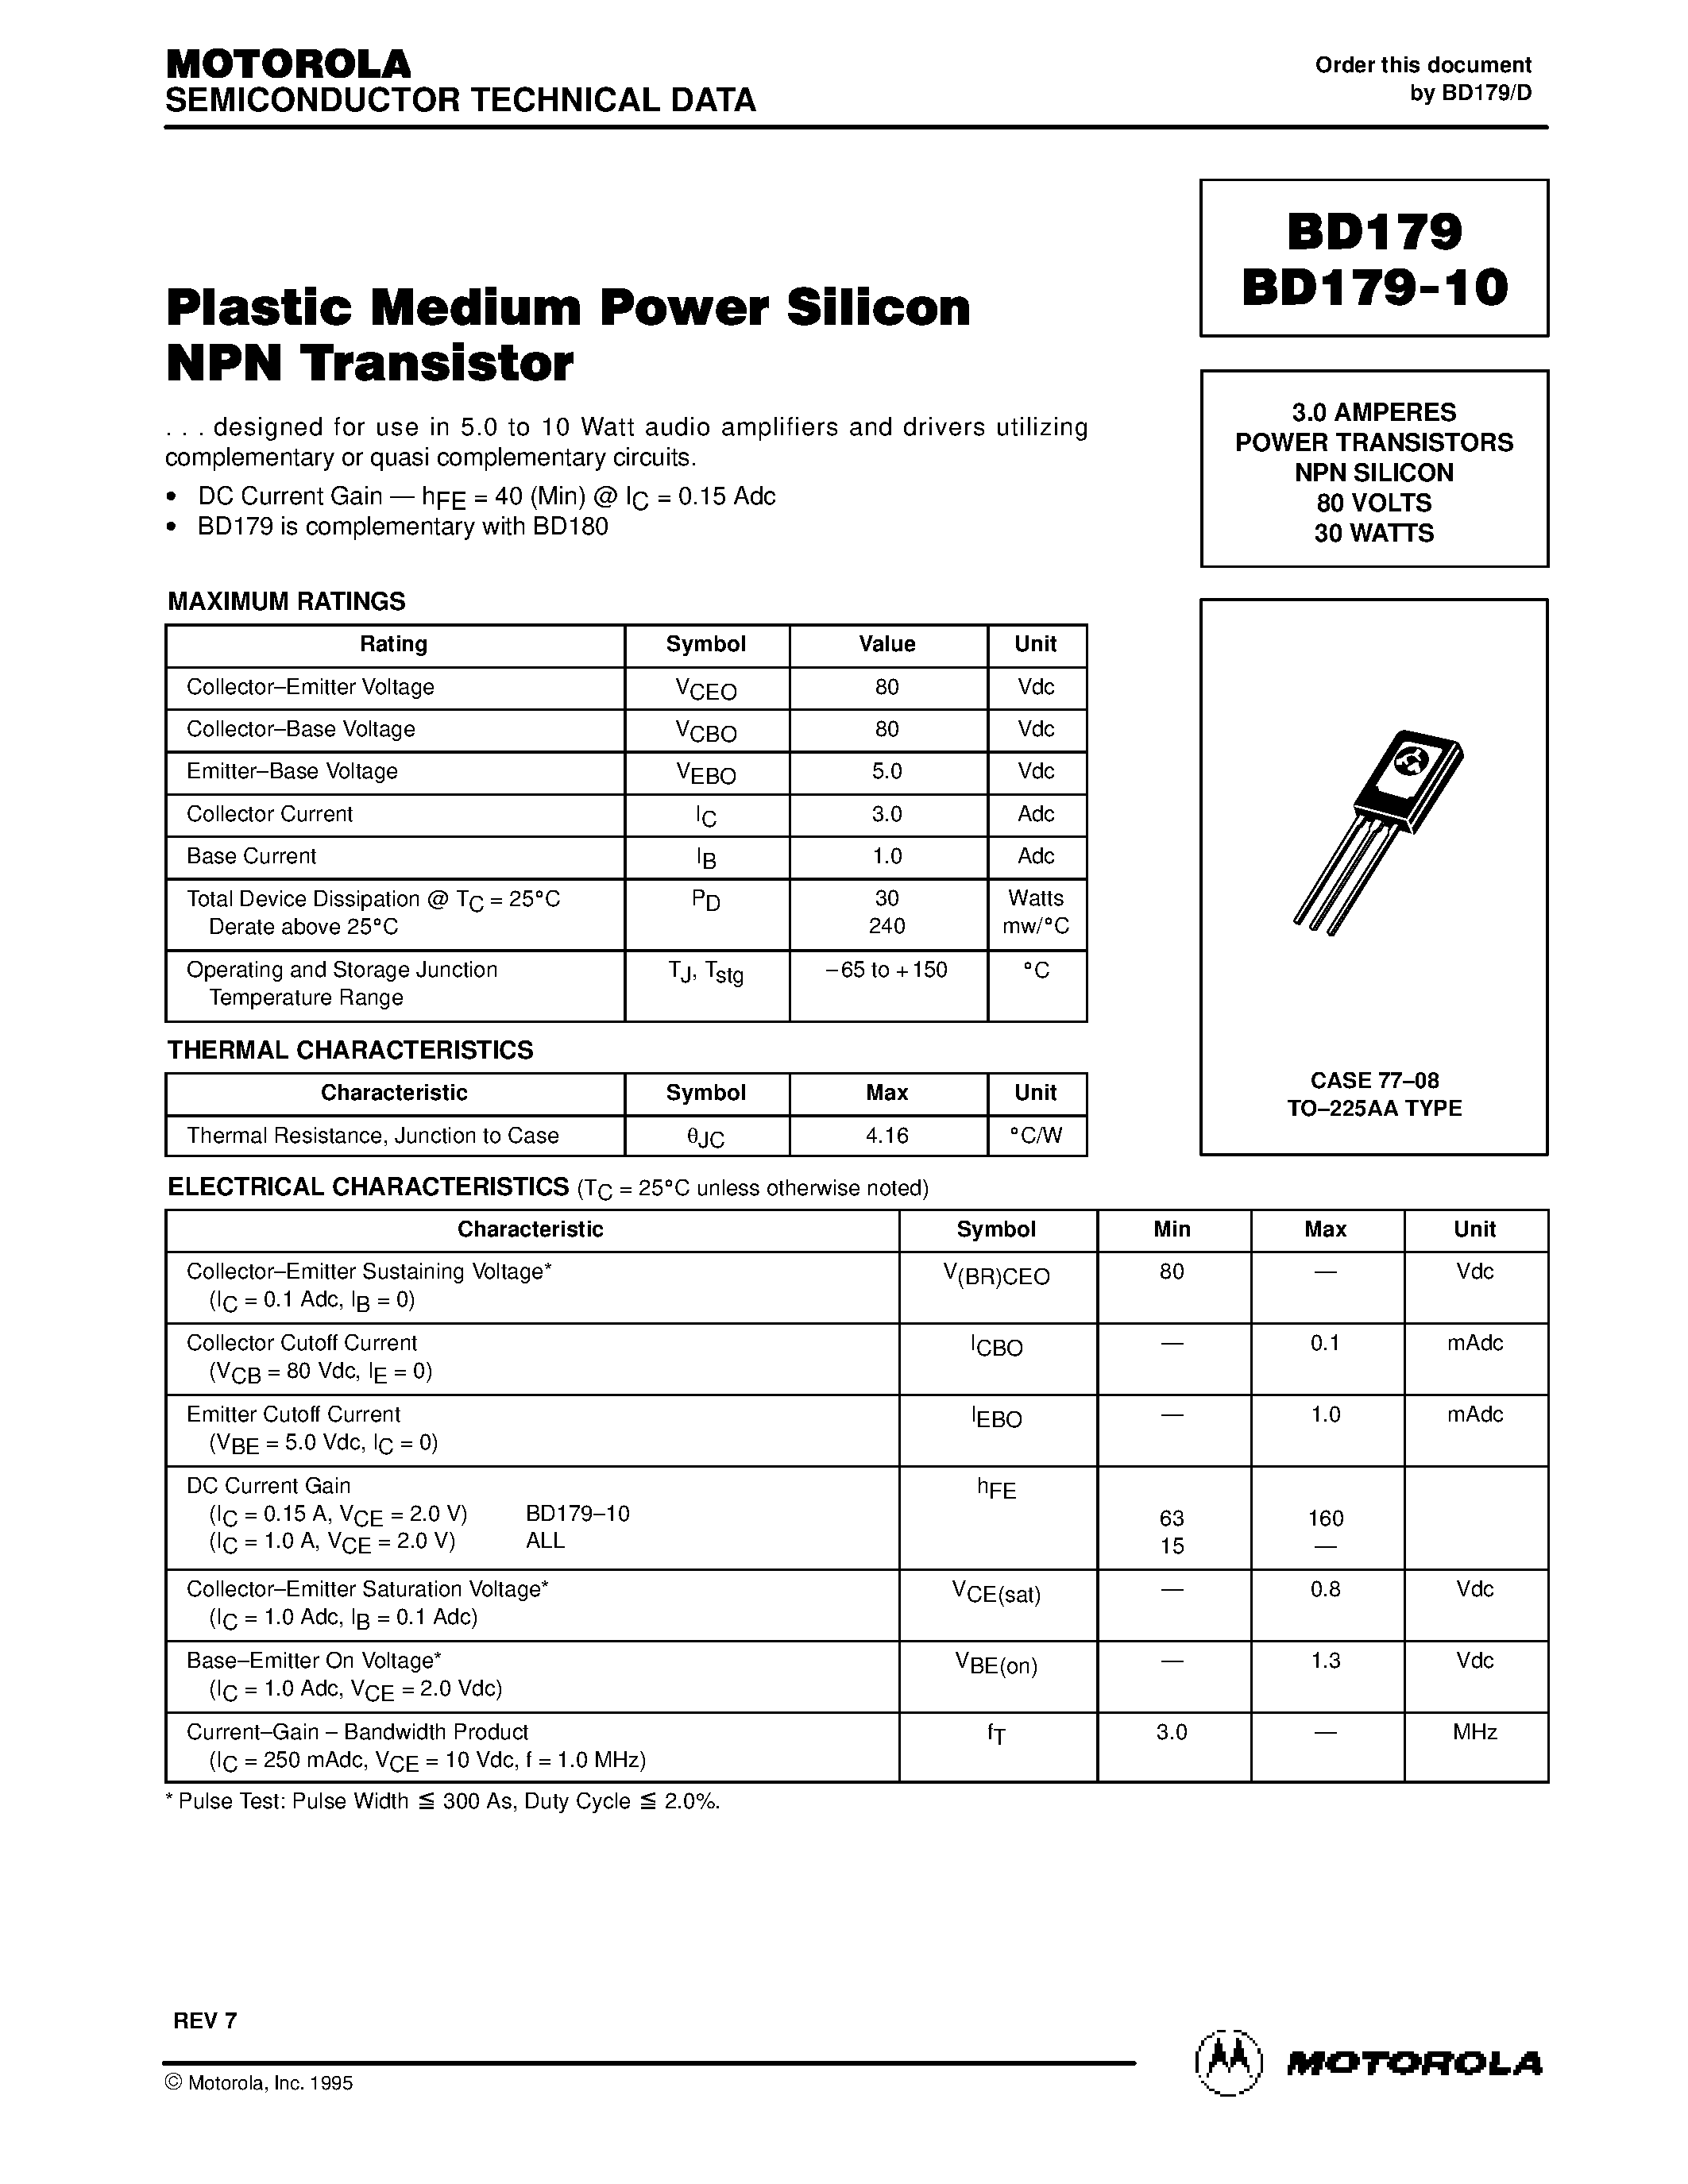 Даташит BD179-10 - Plastic Medium Power Silicon NPNP Transistor страница 1